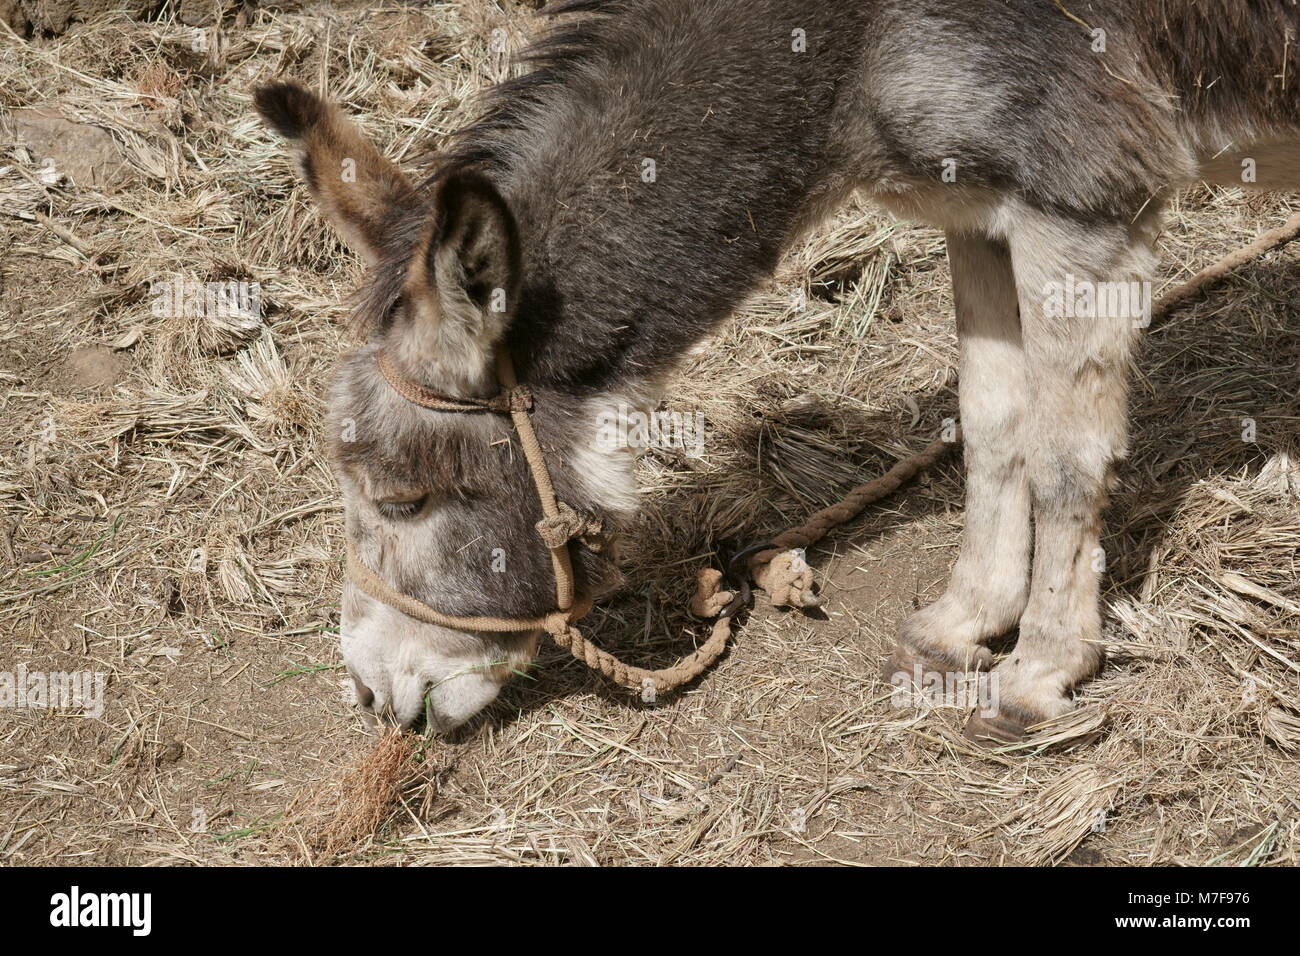 Donkey, Santo Antao, Cape Verde Stock Photo